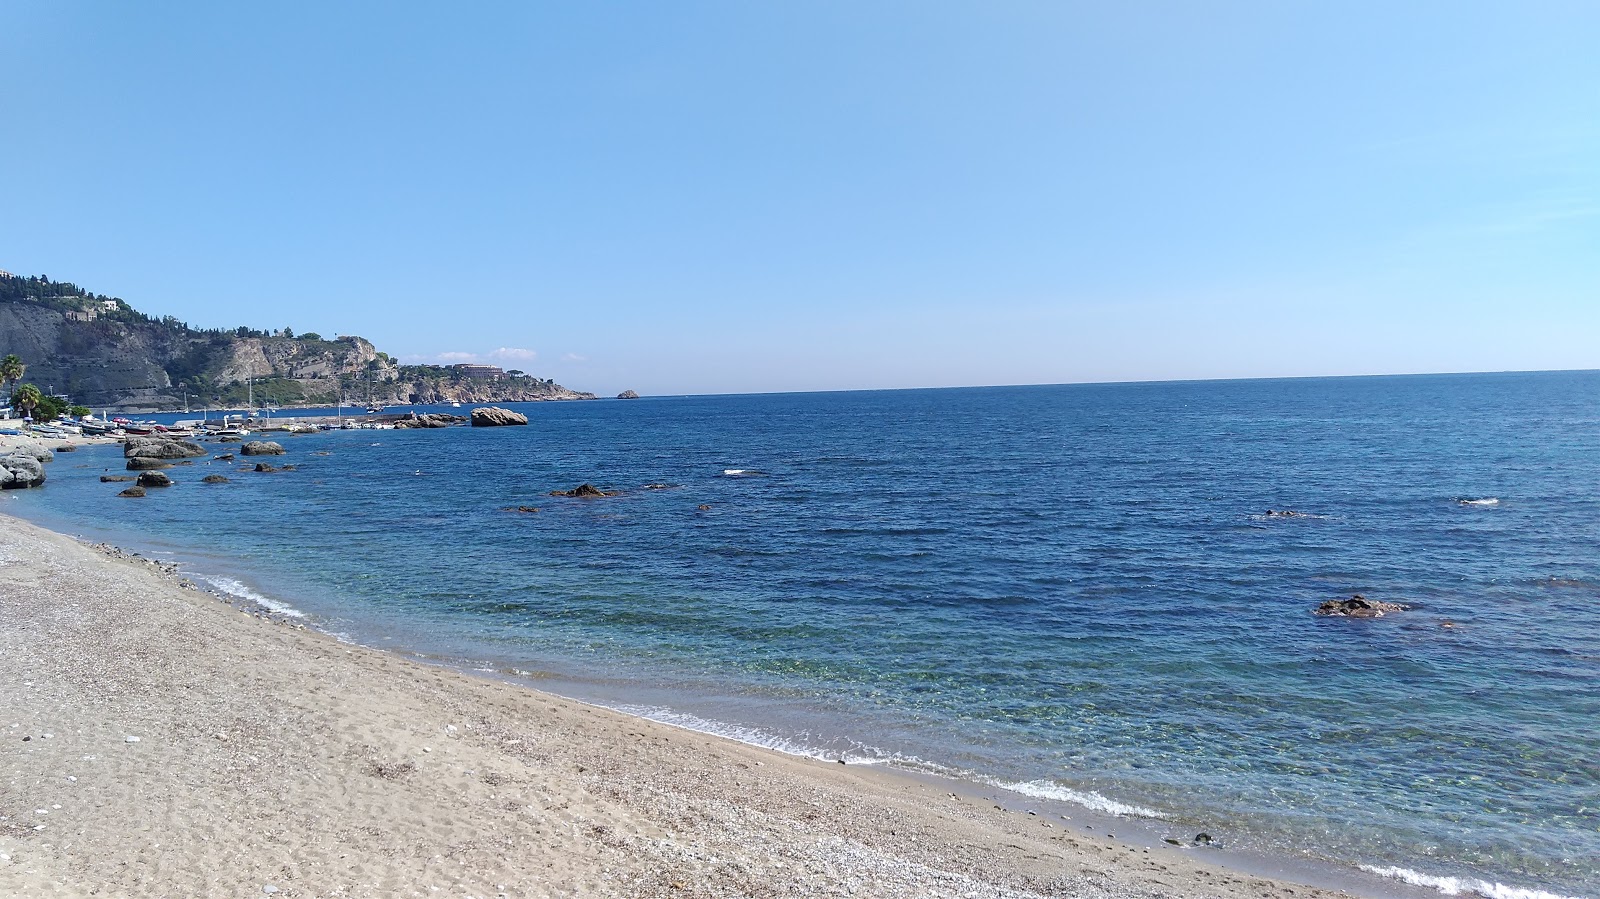 Foto von Spiaggia Giardini Naxos mit schwarzer sand&kies Oberfläche